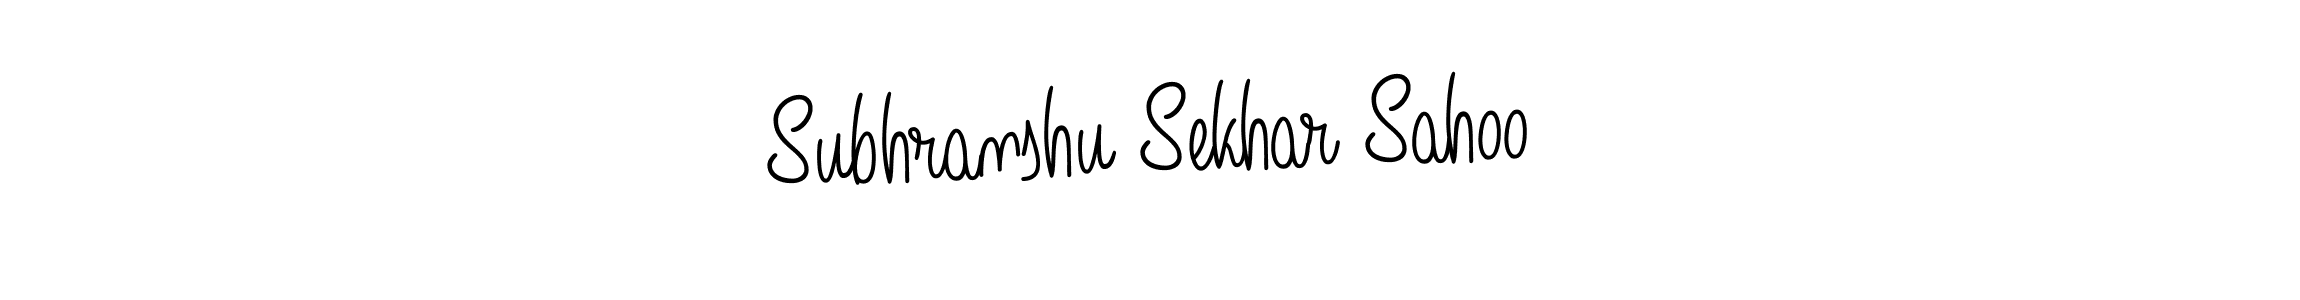 Best and Professional Signature Style for Subhranshu Sekhar Sahoo. Angelique-Rose-font-FFP Best Signature Style Collection. Subhranshu Sekhar Sahoo signature style 5 images and pictures png